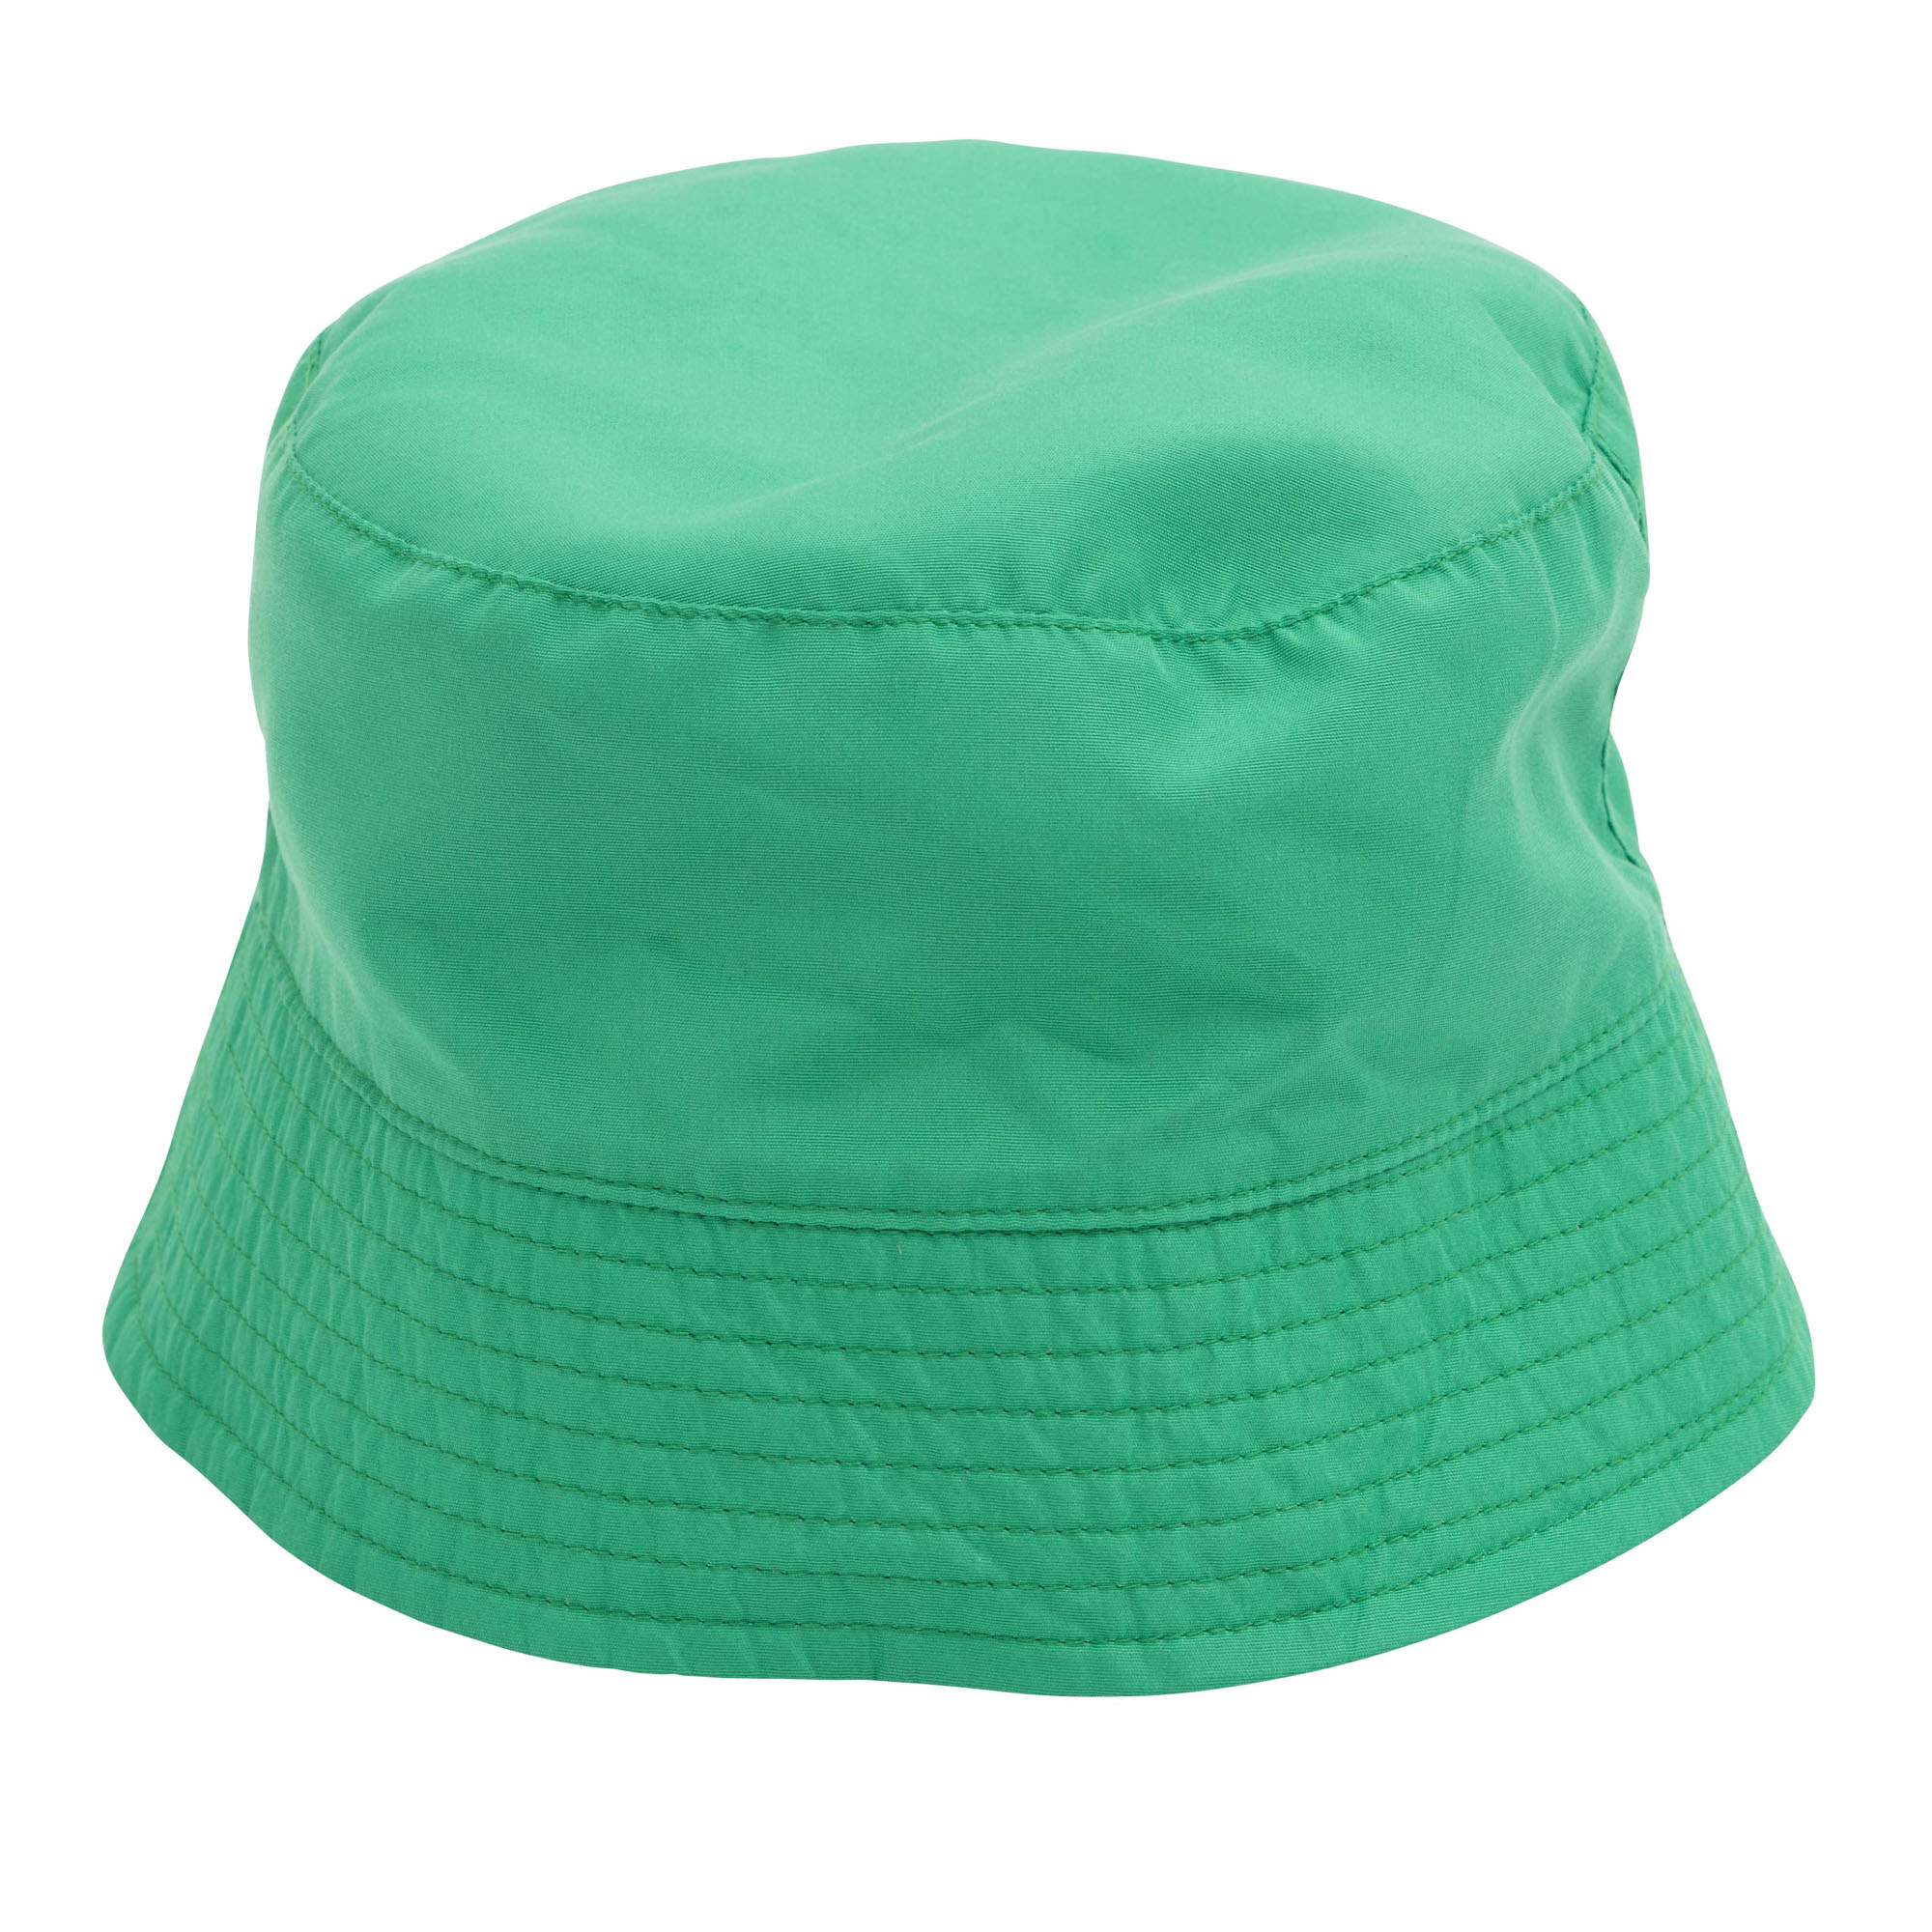 Reversible bucket hat KENZO KIDS for BOY